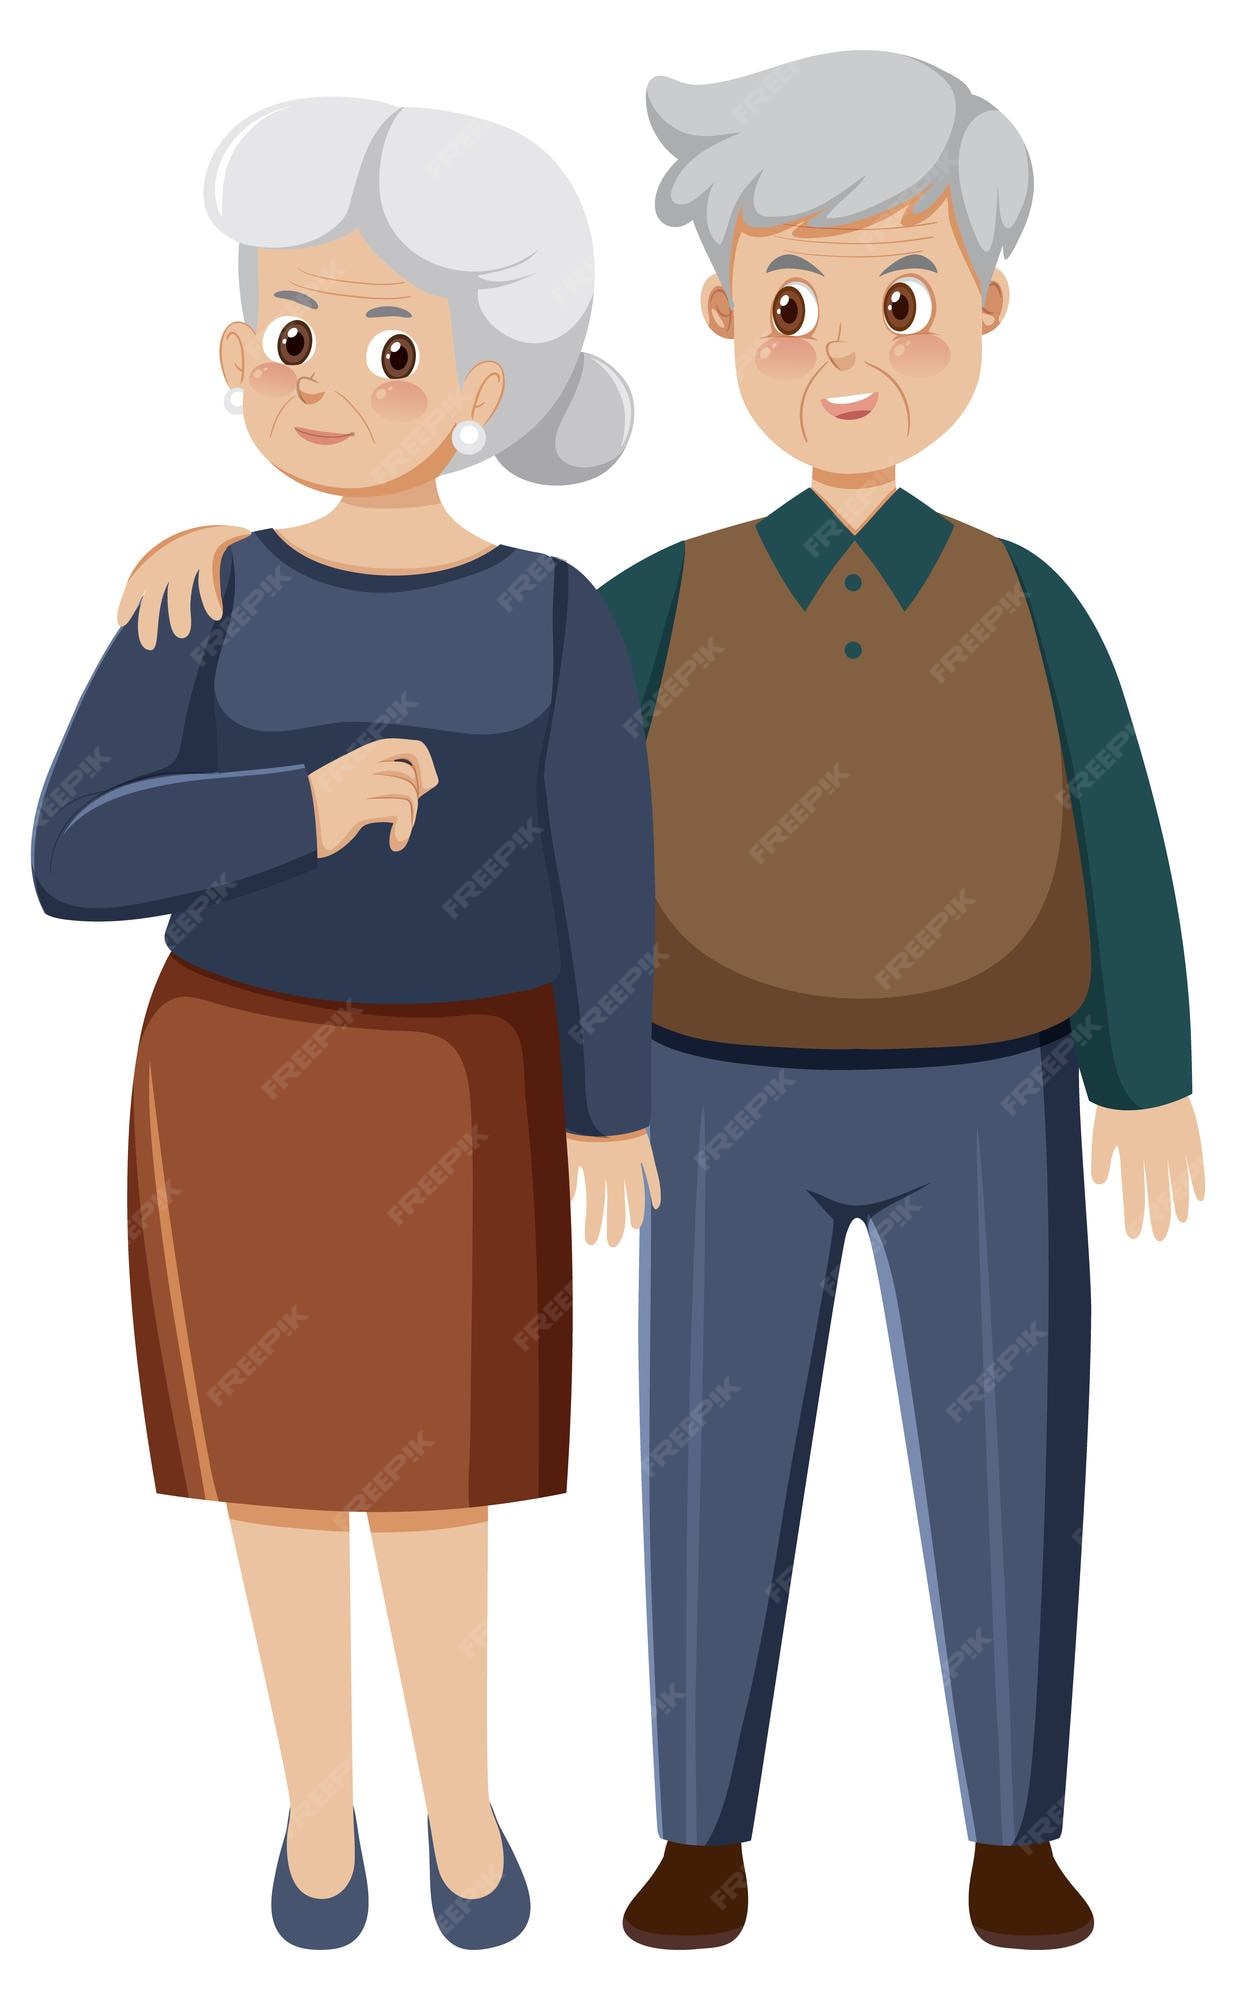 Premium Vector | Elderly couple in cartoon style